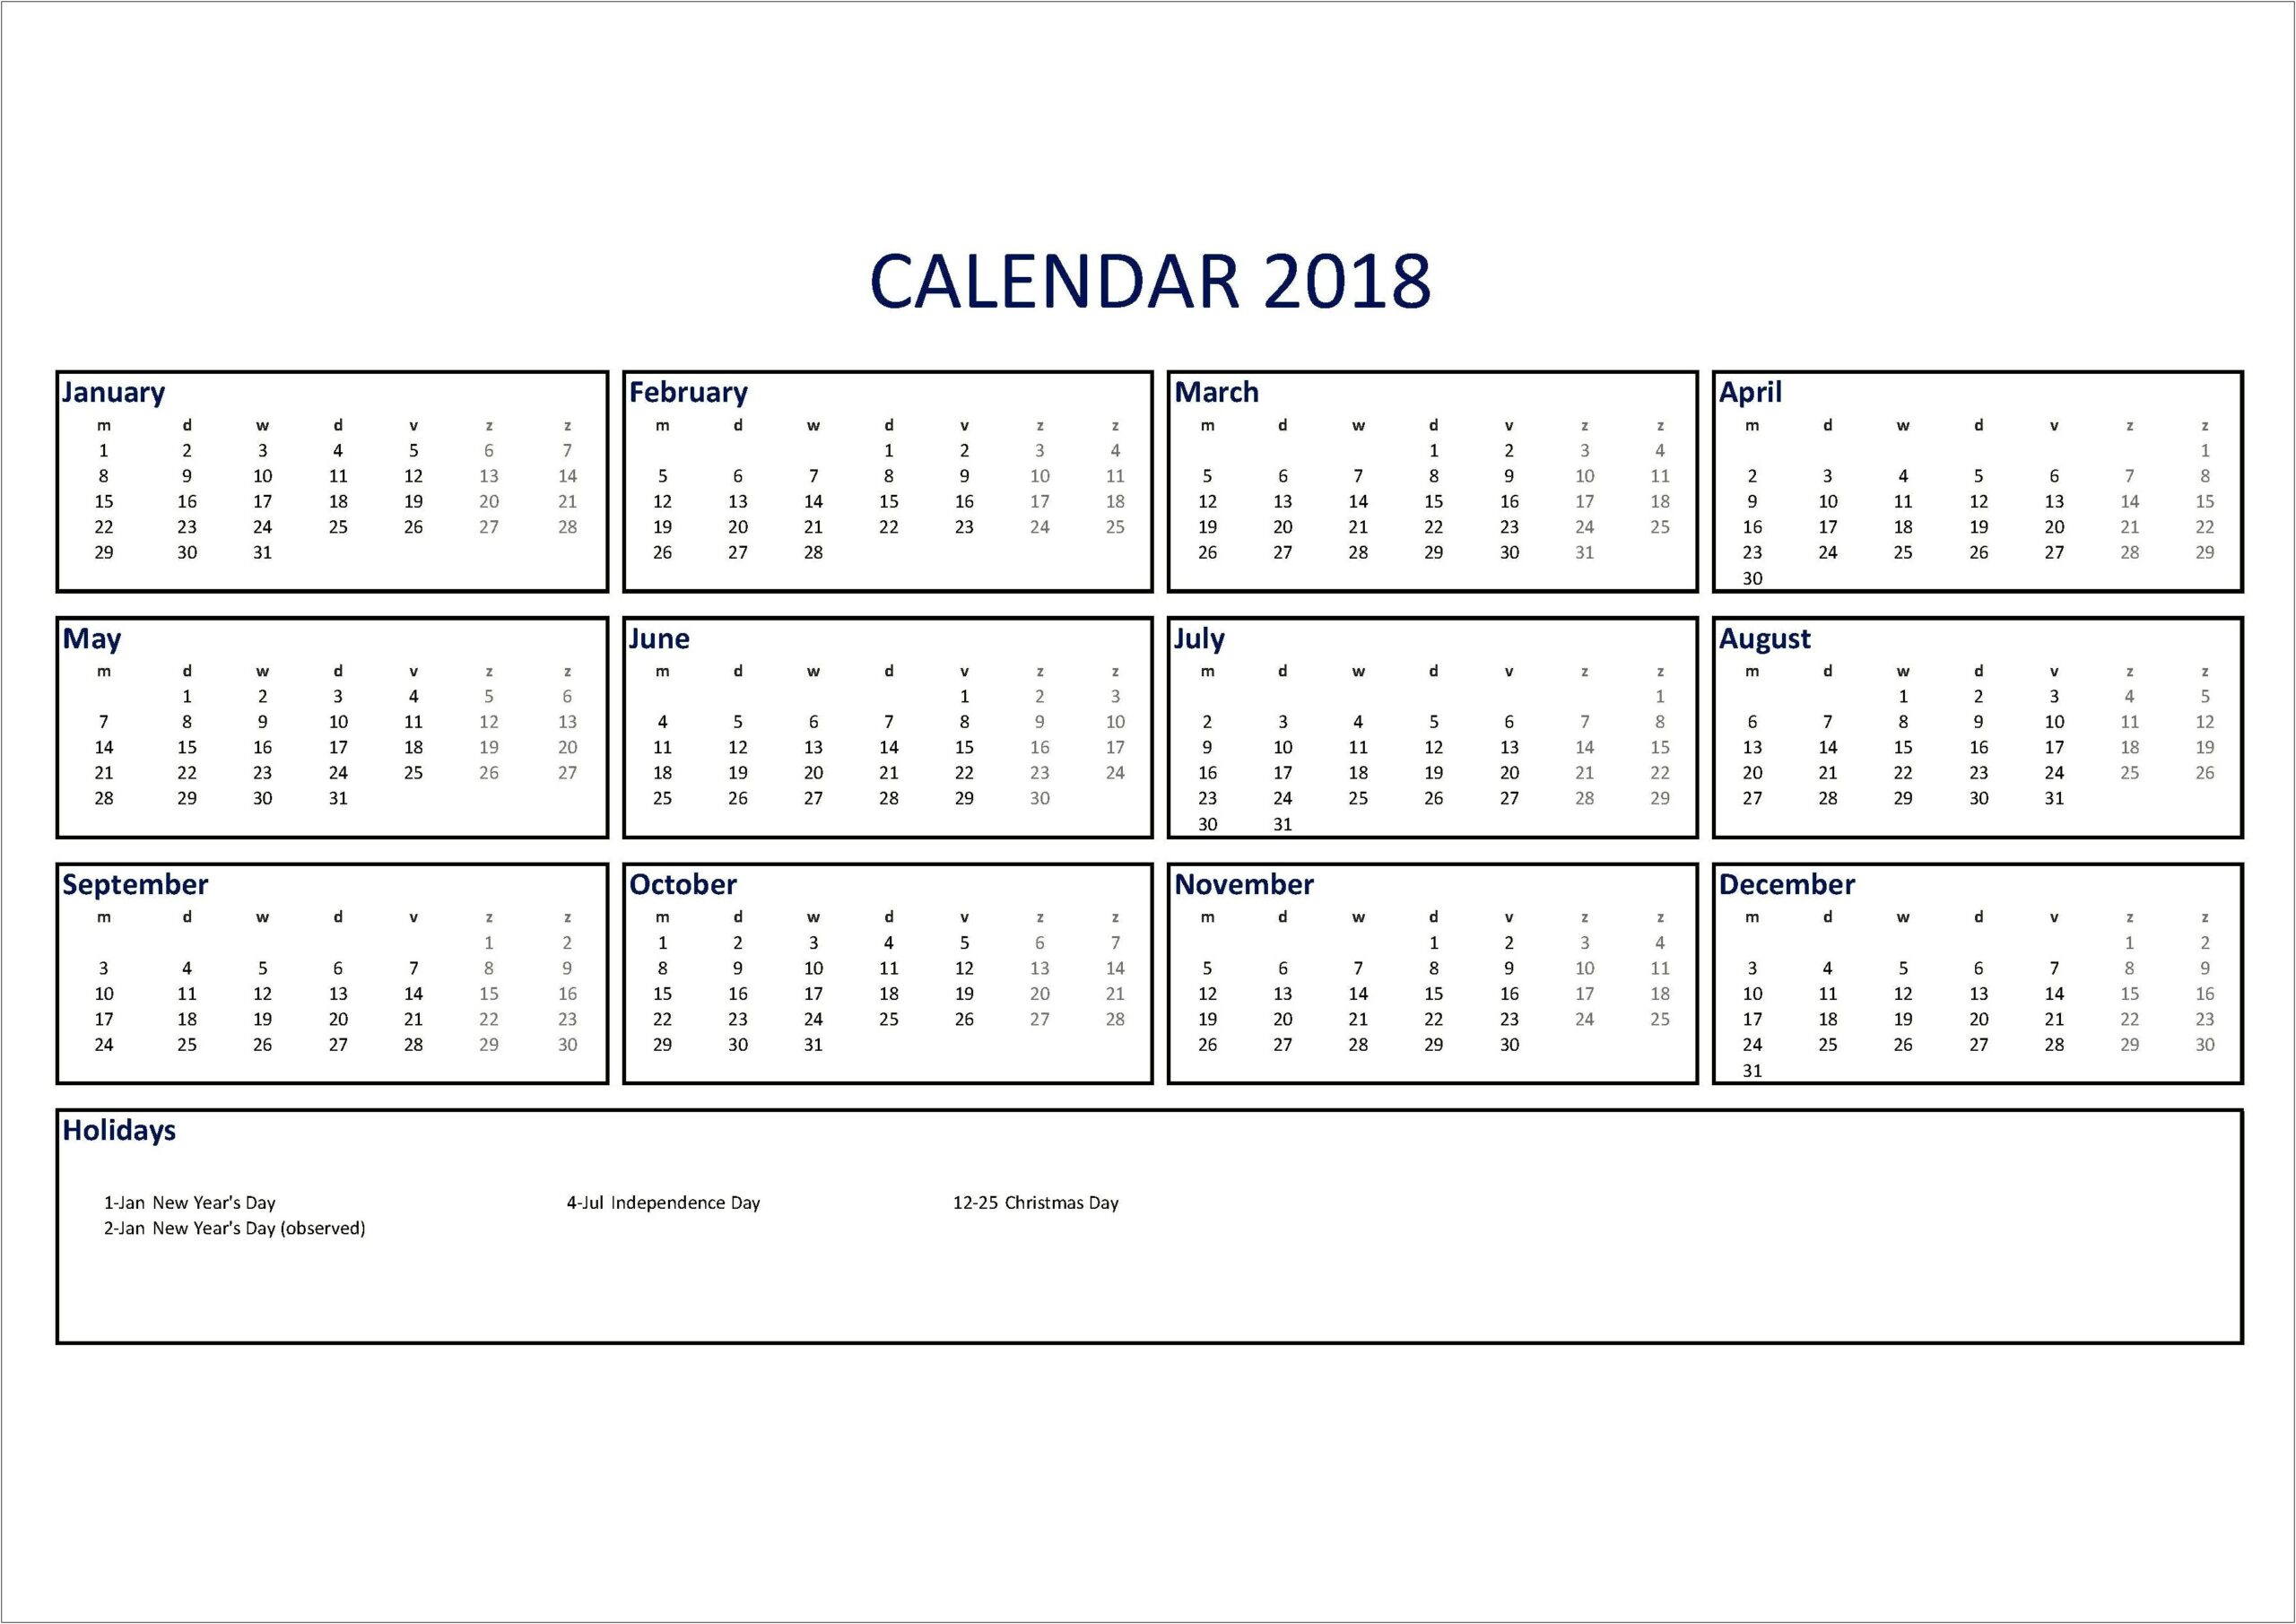 Calendar 2018 Template Excel Free Download